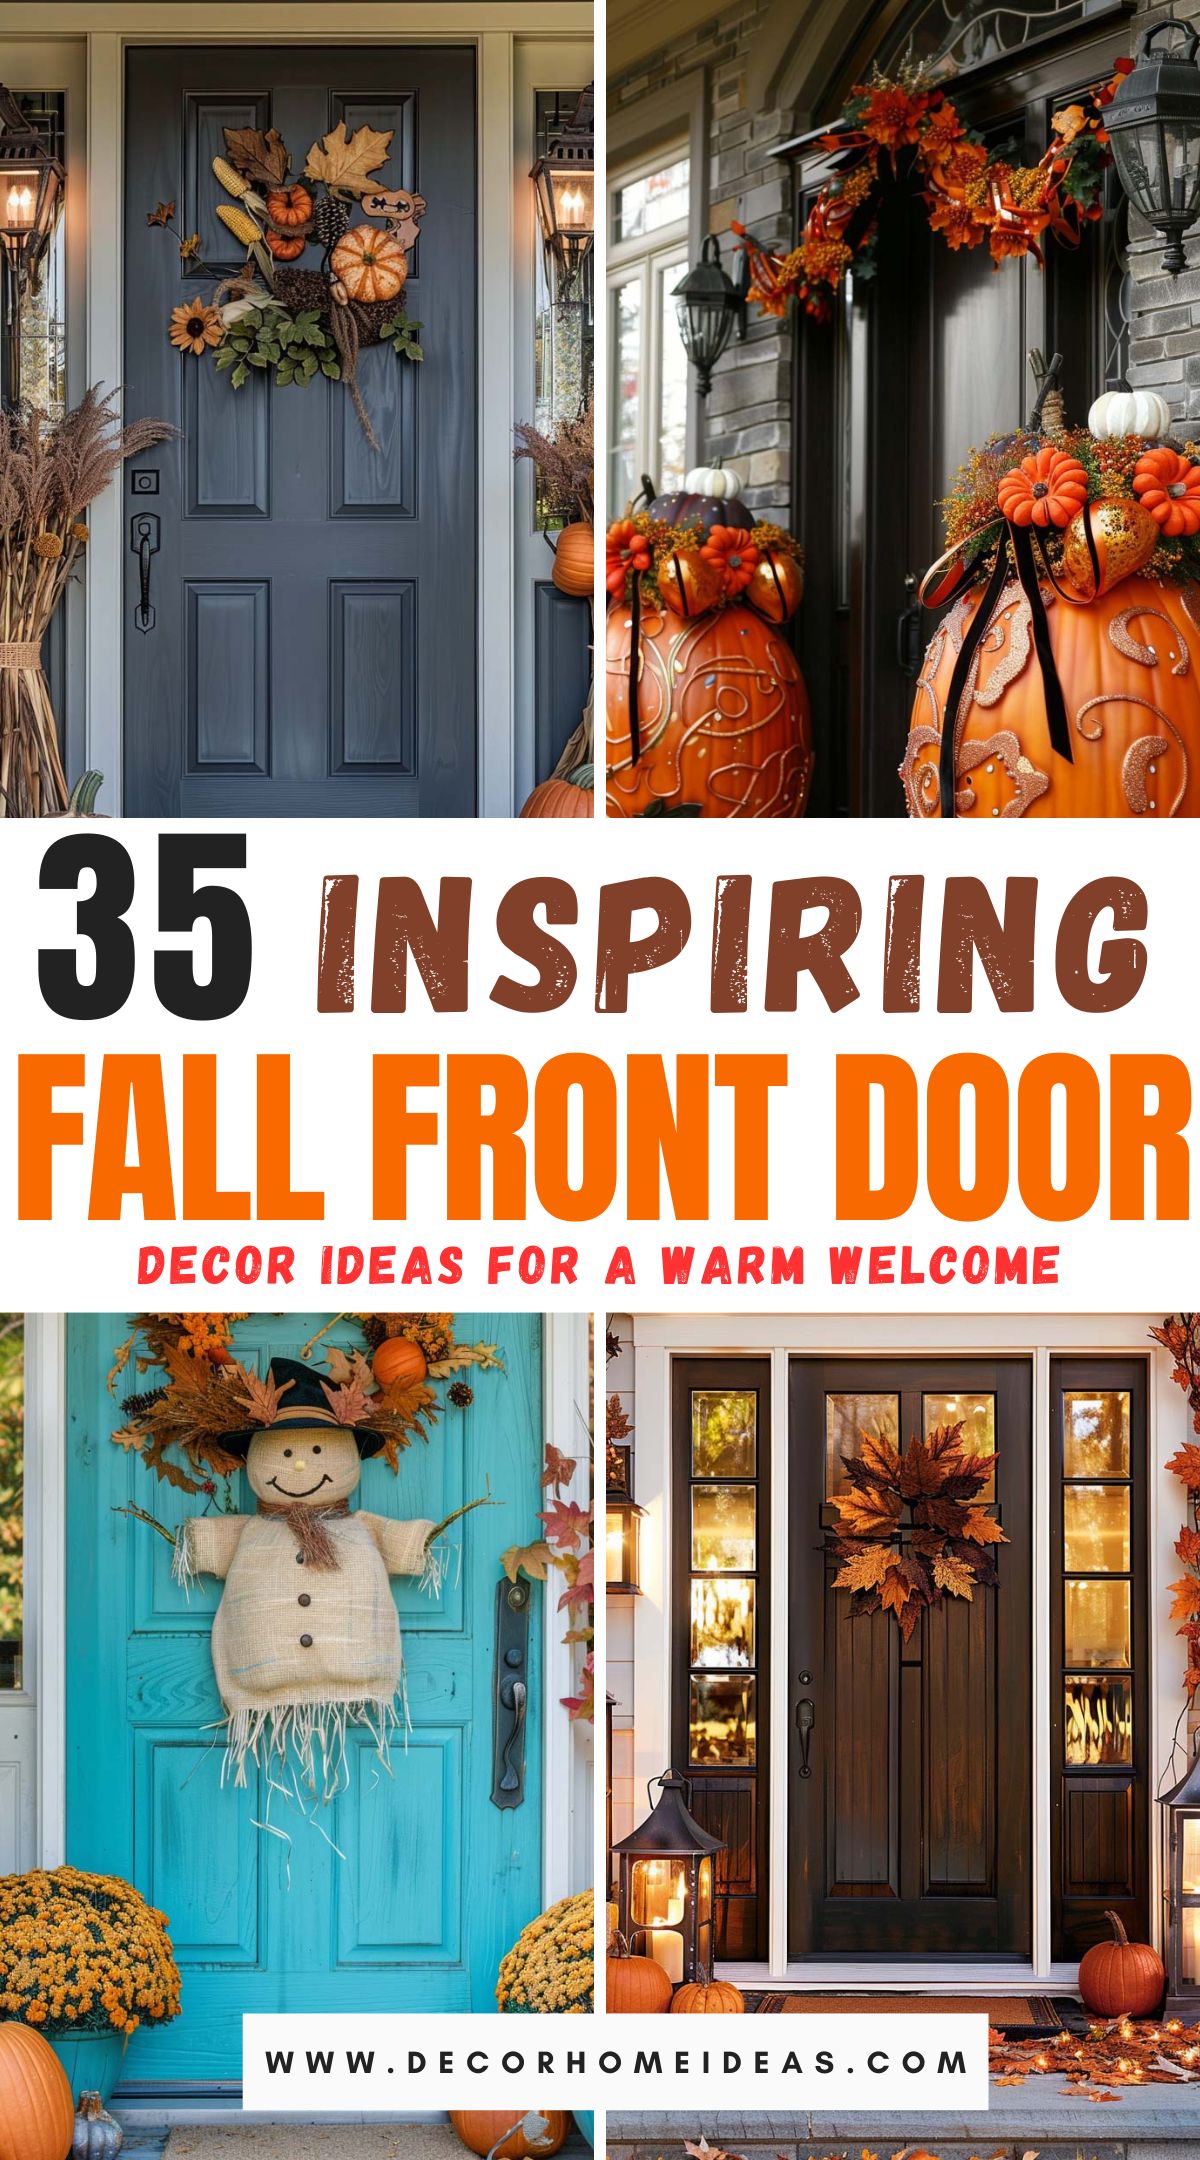 DIY Fall Front Door Decor Ideas